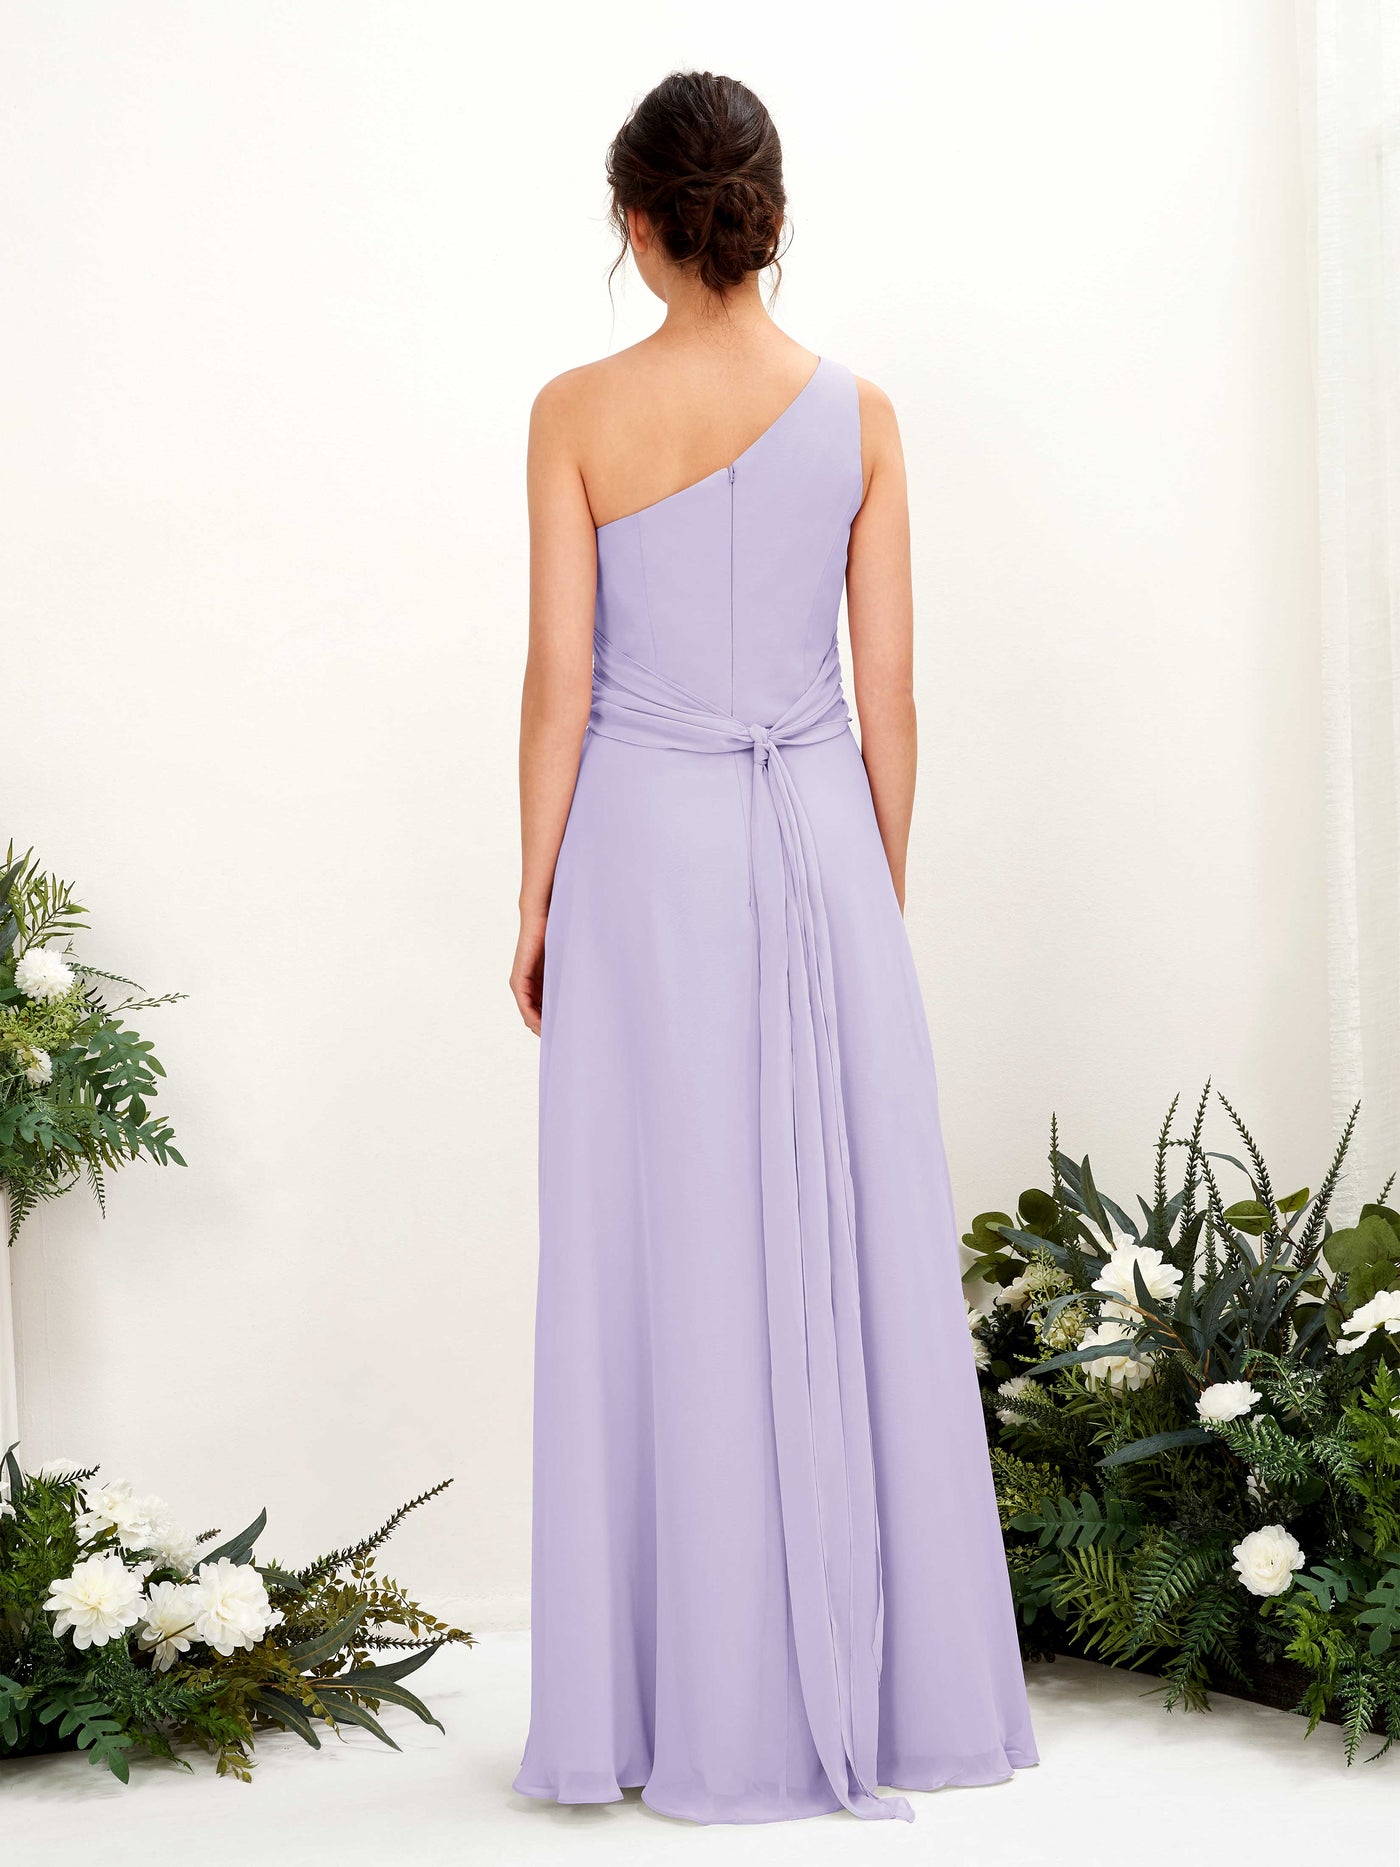 Kira One-Shoulder Satin Dress - Dusty Lilac